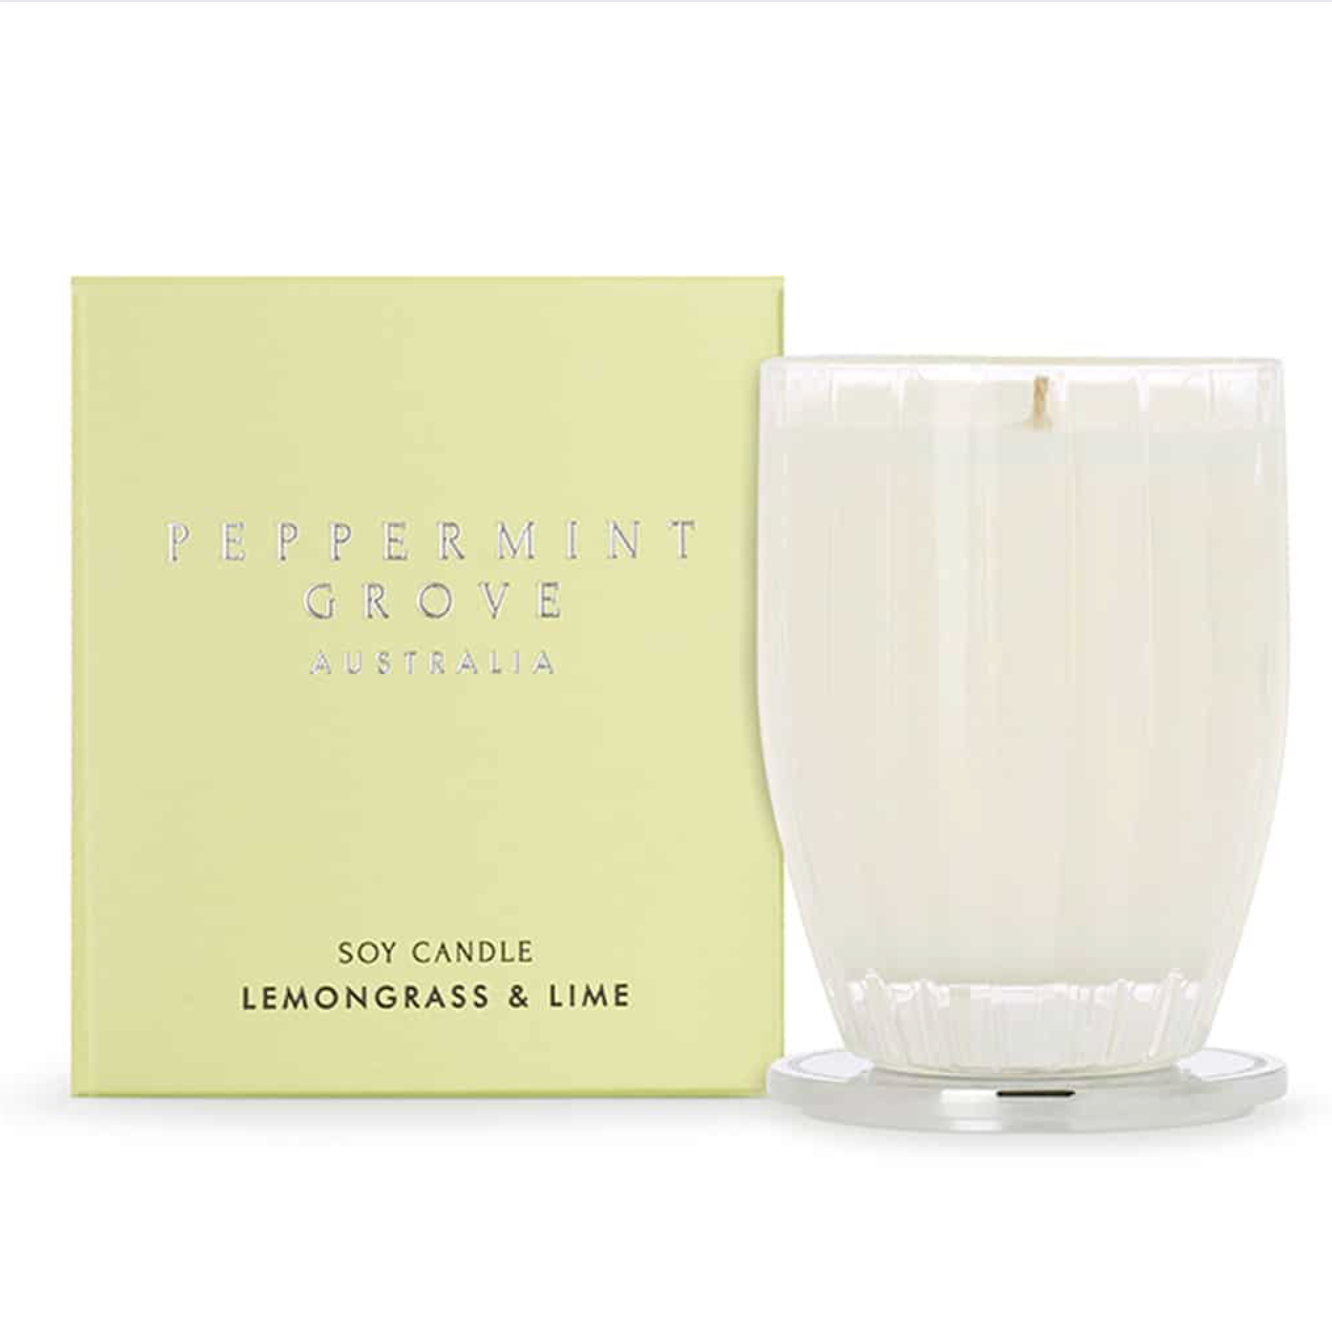 Peppermint Grove Lemongrass & Lime Candle 200g